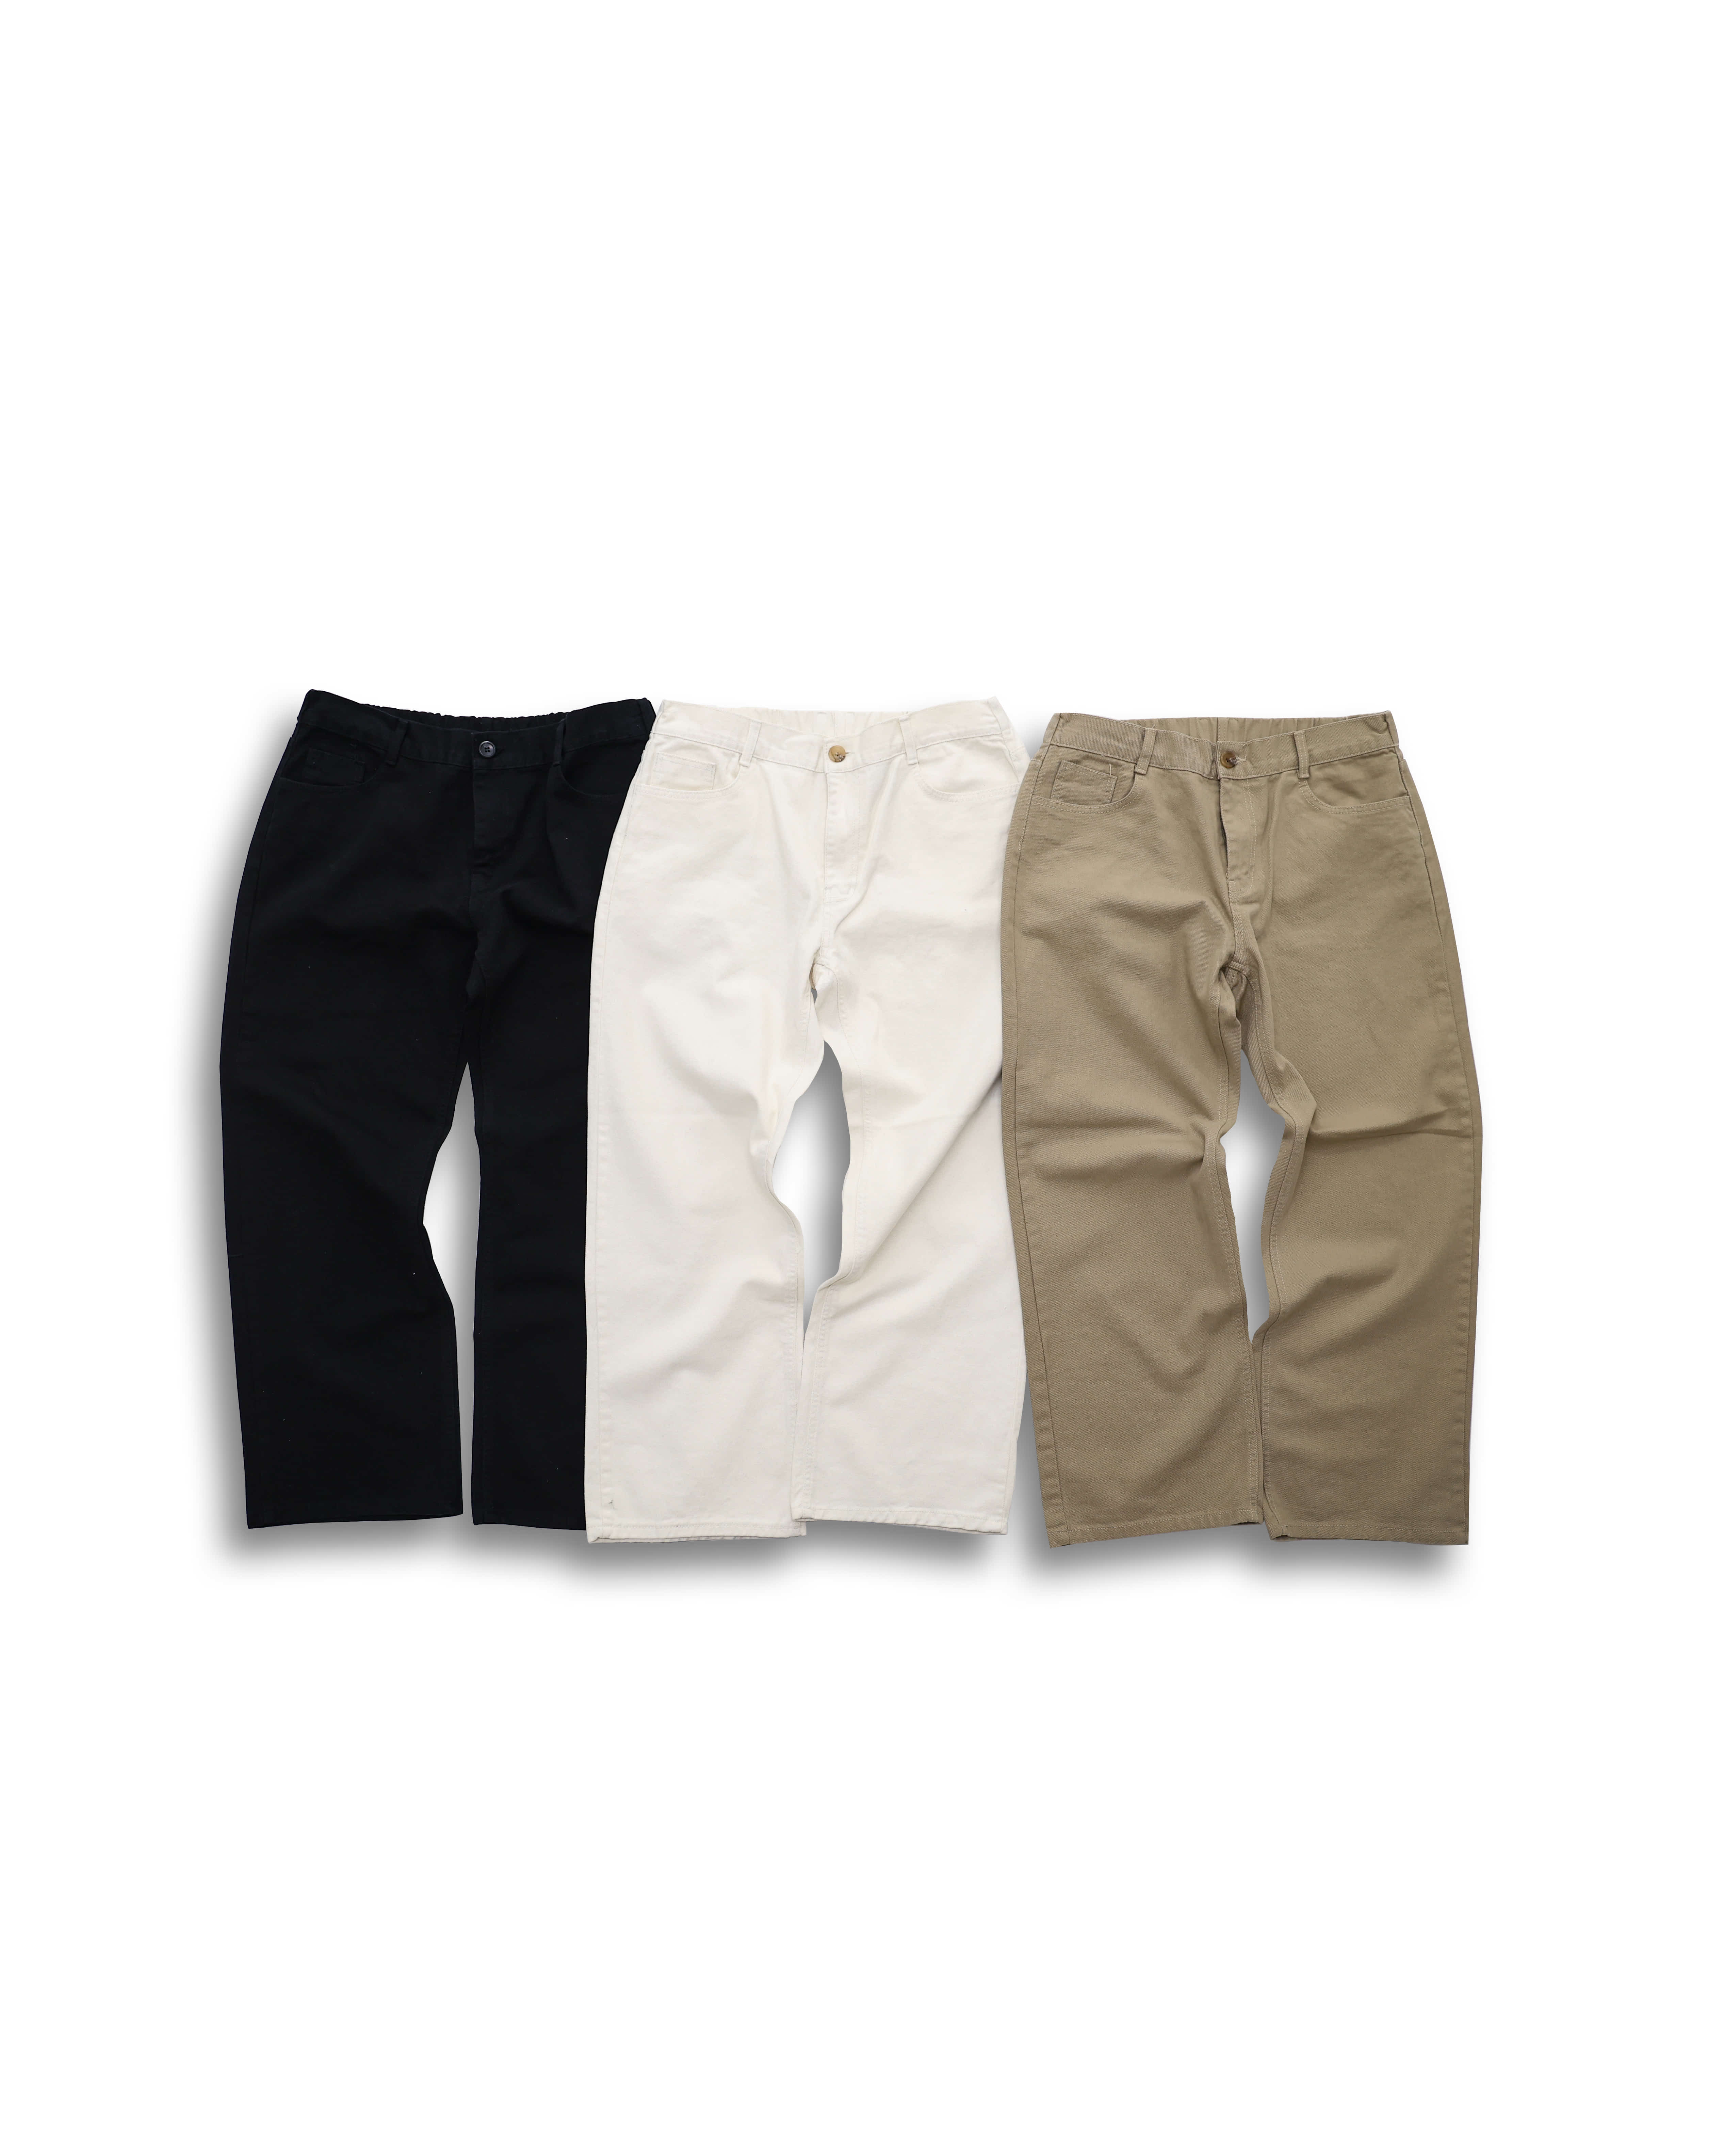 Wide Banding 5 Pocket Pants (Black/Beige/Cream)